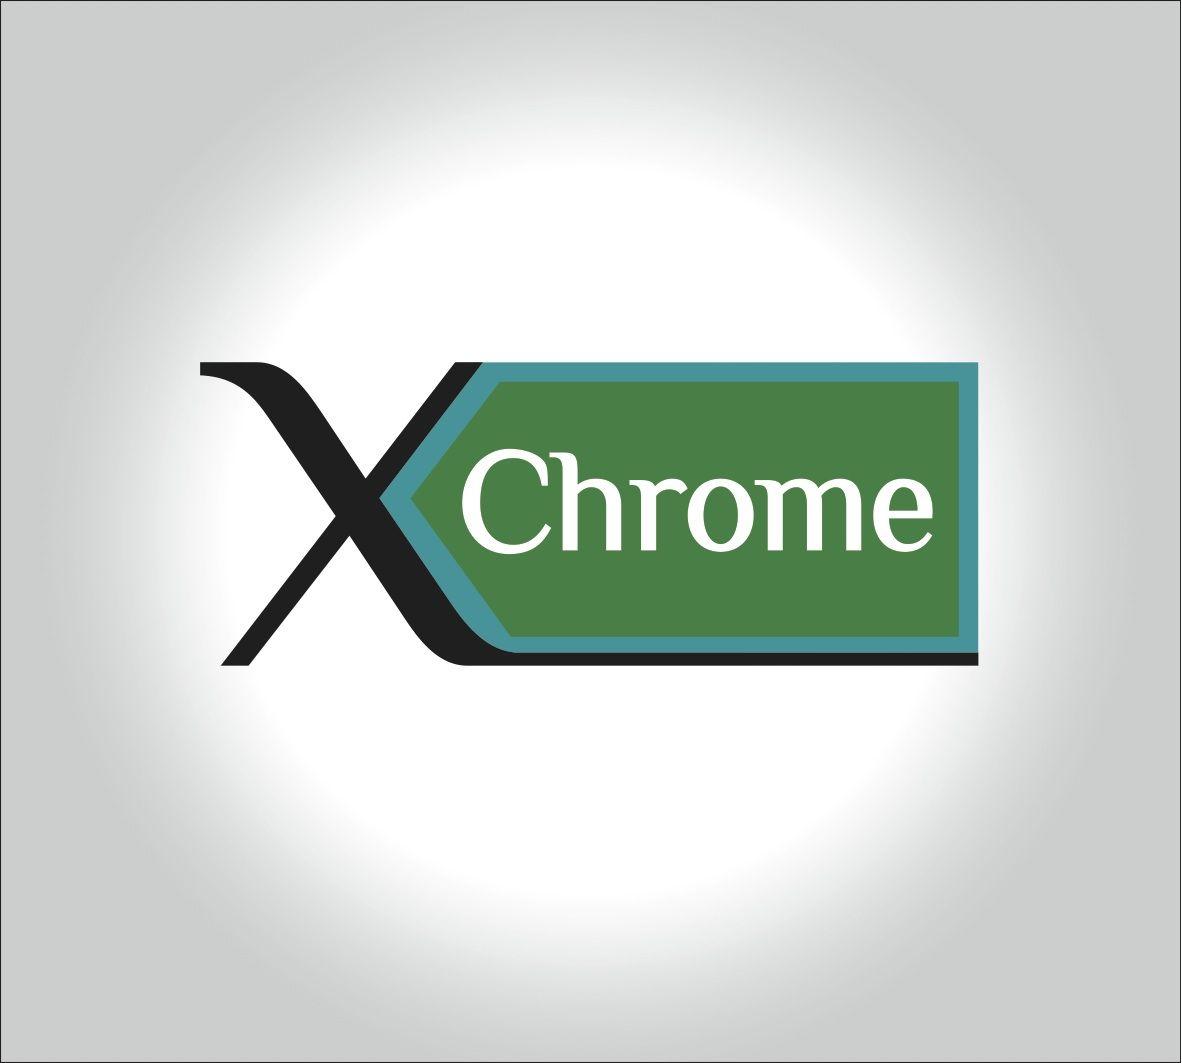 Crome Green Company Logo - Business Logo Design for X-Chrome by mezzale | Design #988705